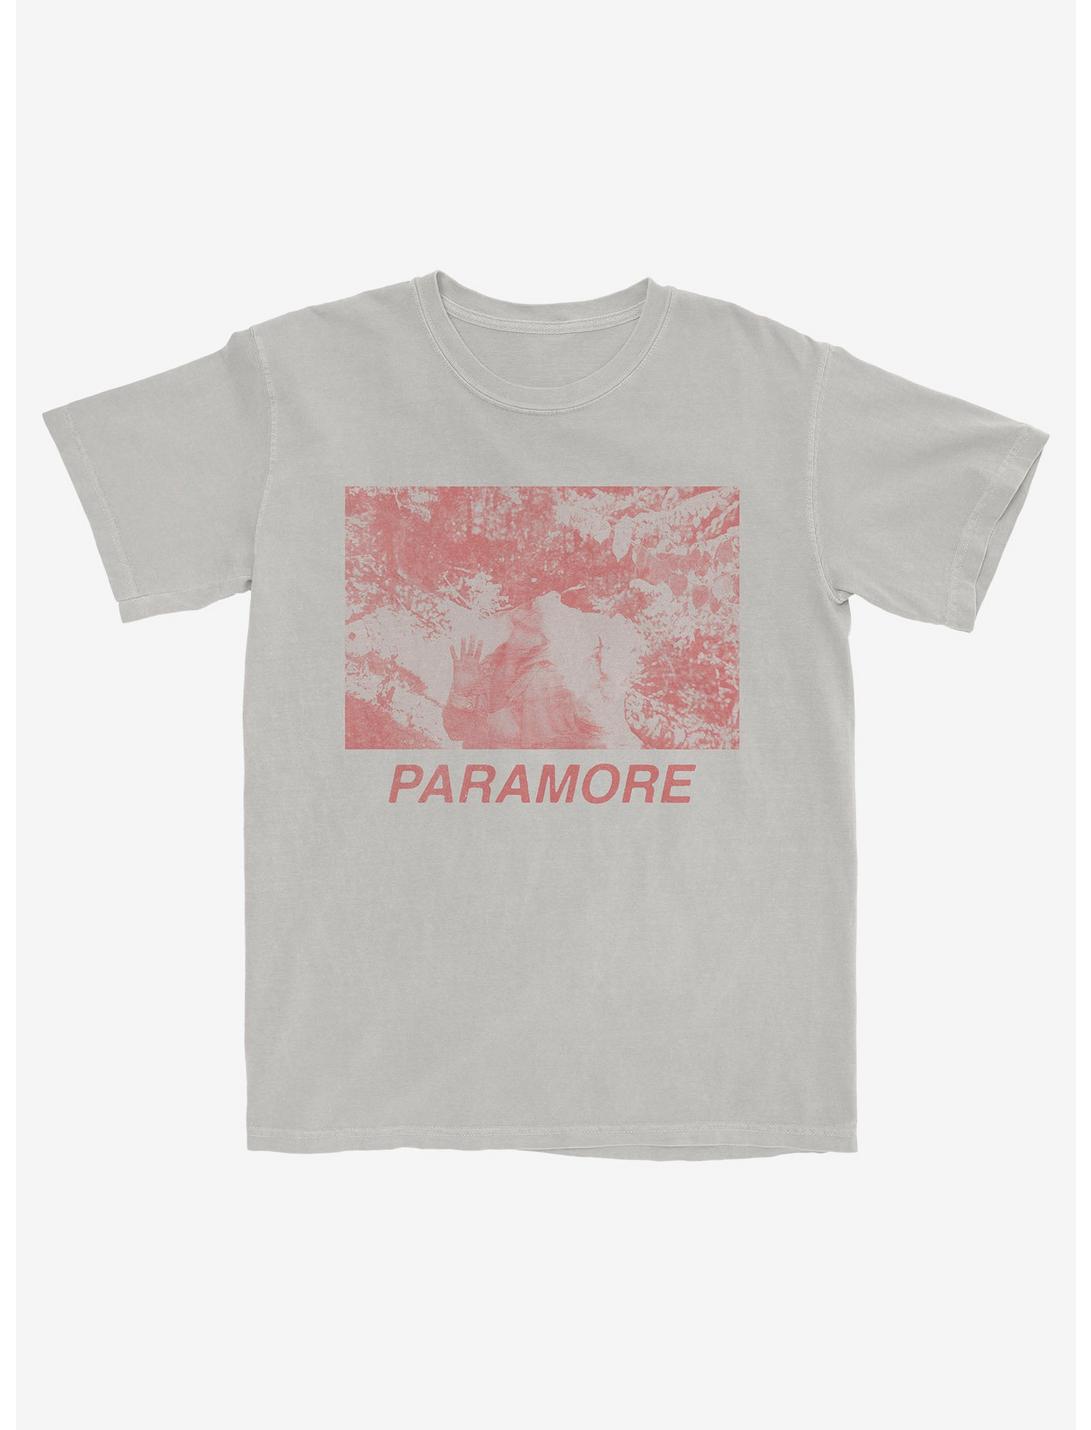 Paramore Forest Boyfriend Fit Girls T-Shirt, GREY, hi-res